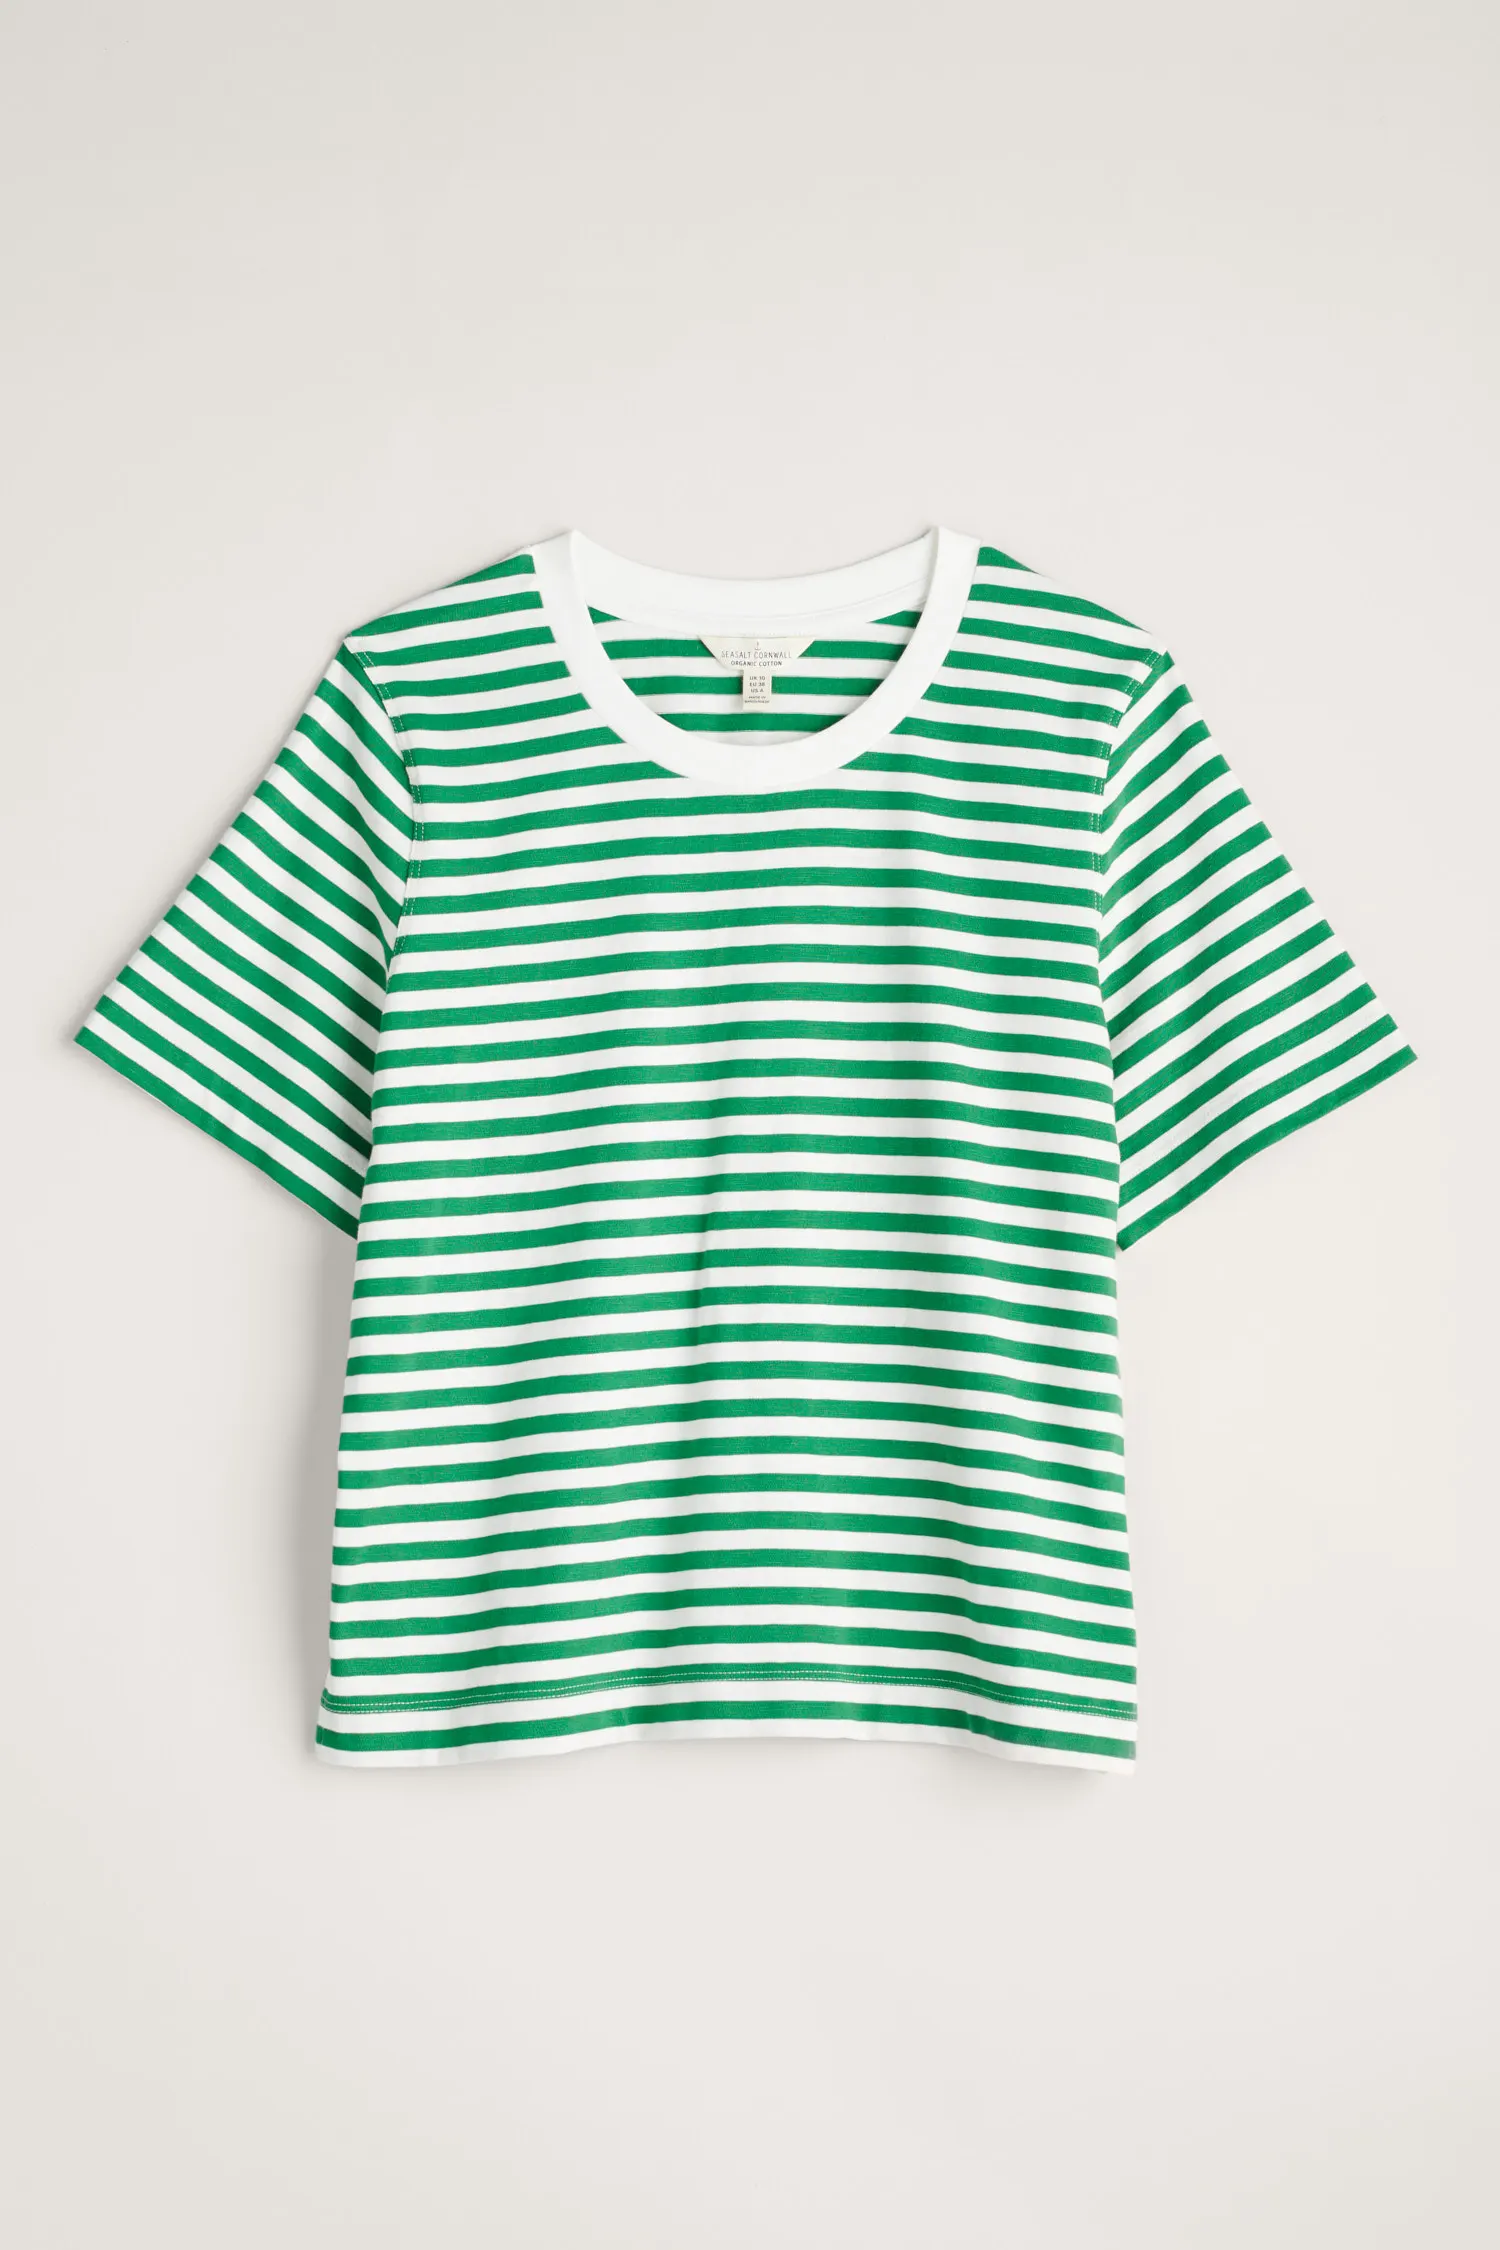 SEASALT Copseland T-Shirt-Mini Cornish Island Chalk, grün gestreift